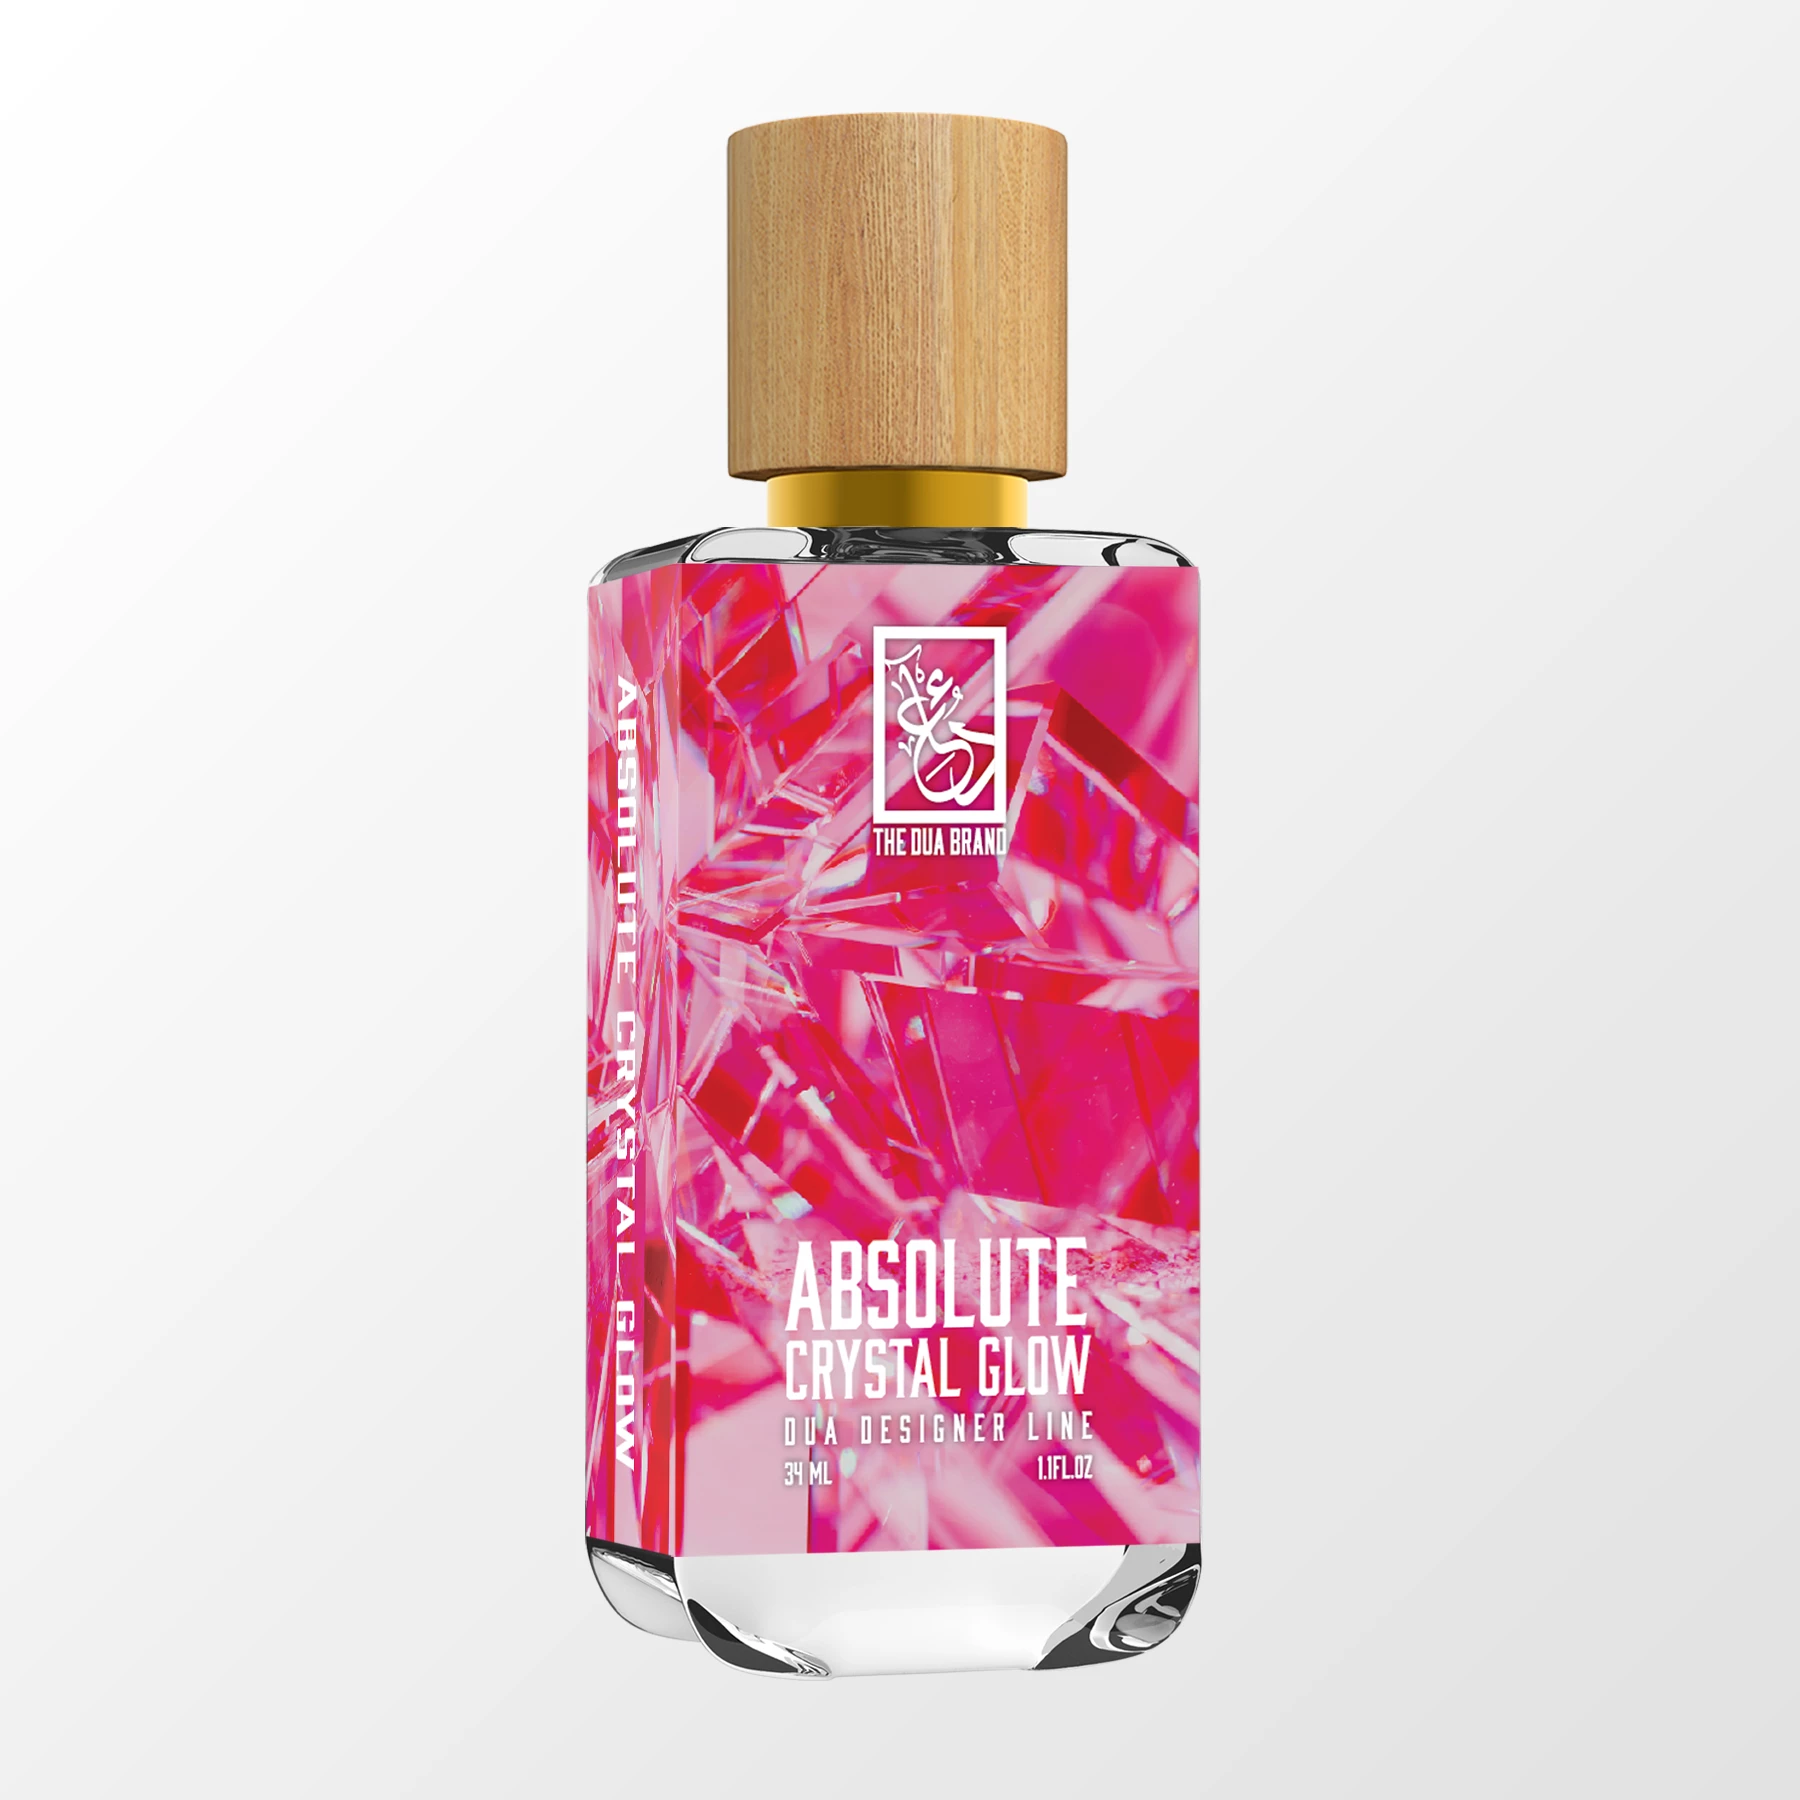 Absolute Crystal Glow - DUA FRAGRANCES - Inspired by Bright Crystal Absolu  Versace - Feminine Perfume - 34ml/1.1 FL OZ - Extrait De Parfum